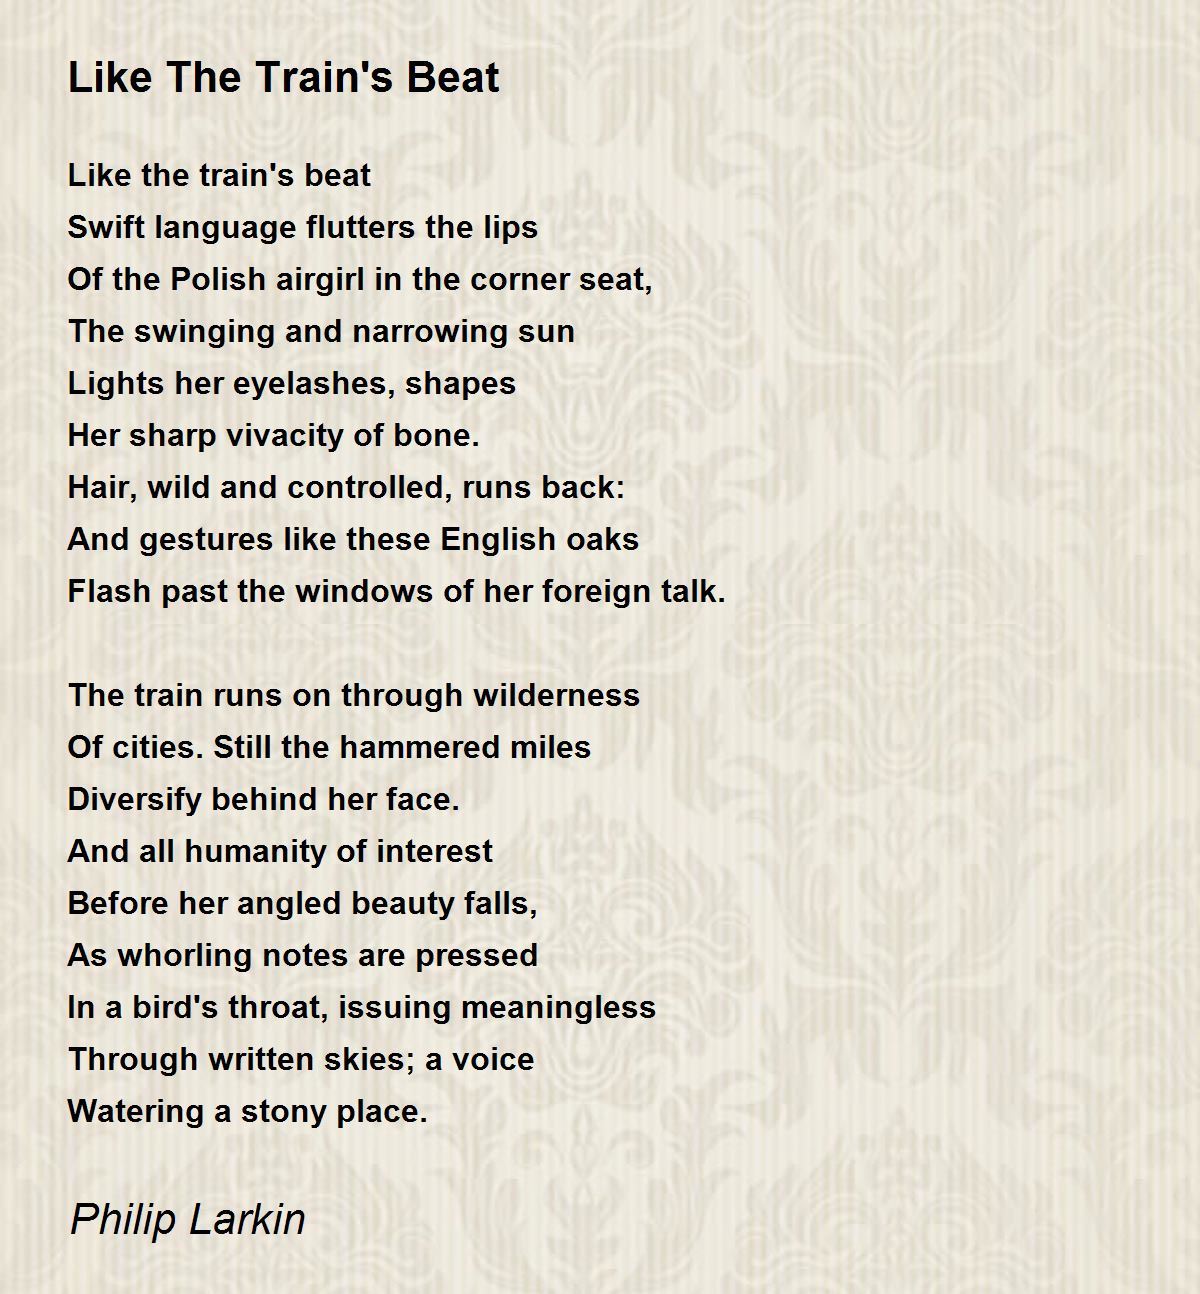 Like The Train's Beat - Like The Train's Beat by Philip Larkin